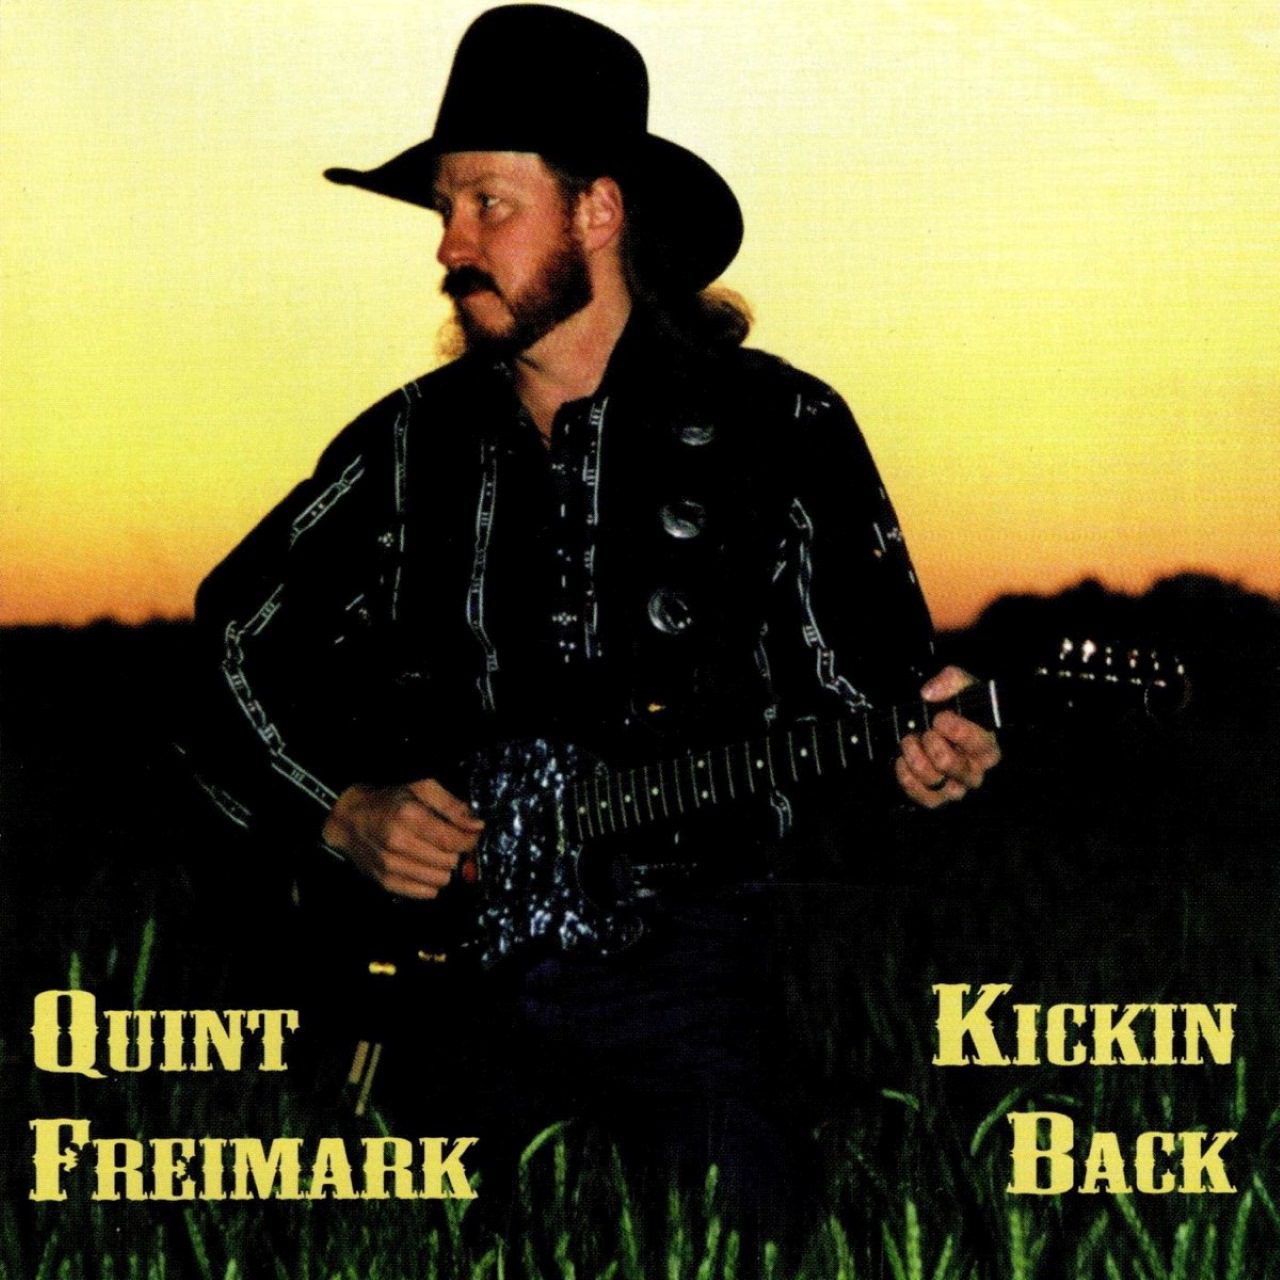 Quint Freimark – Kickin Back cover album